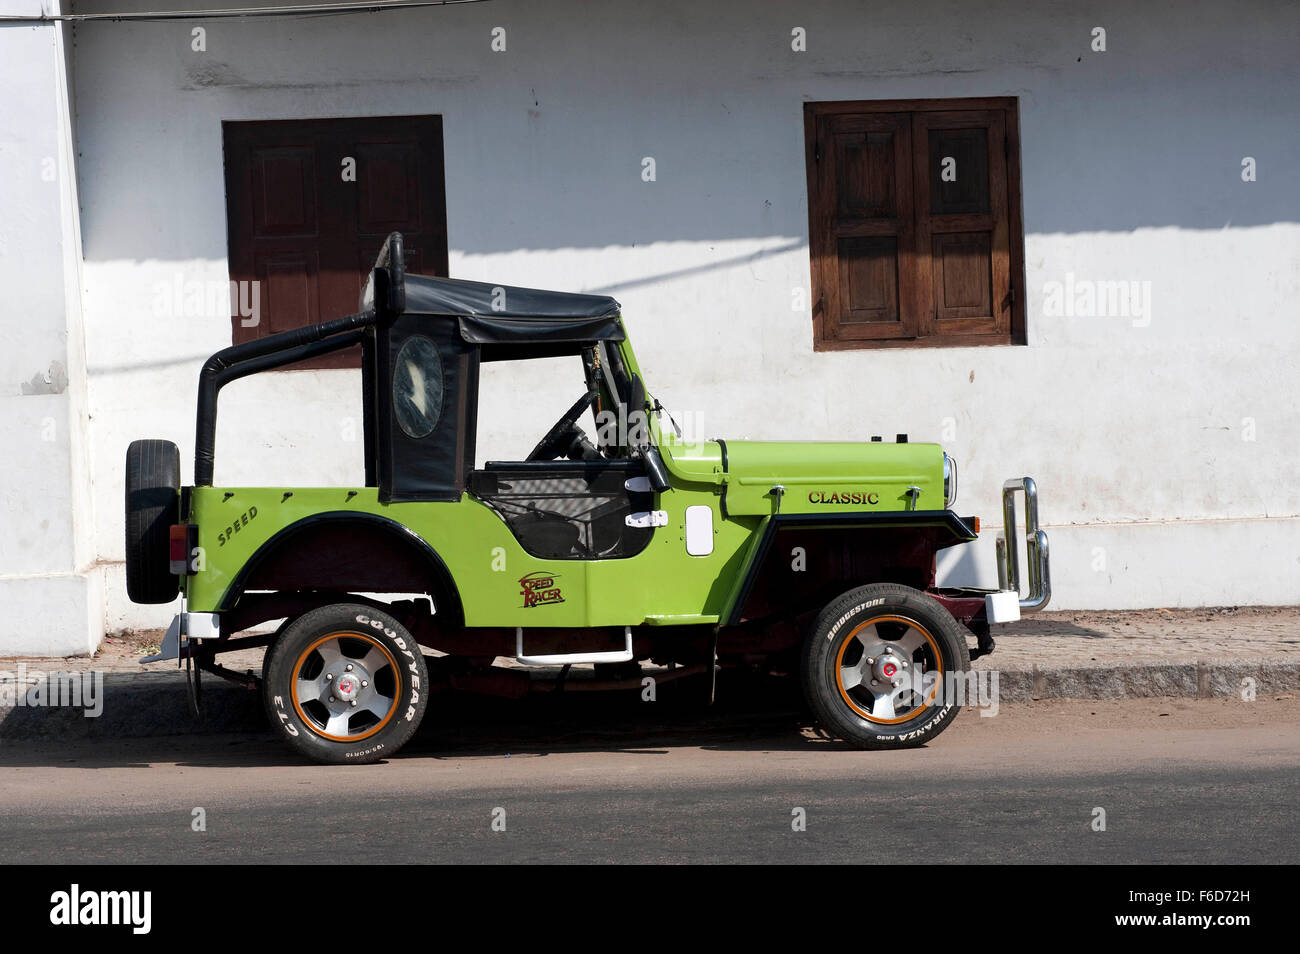 Jeep on road, thiruvananthapuram, kerala, india, asia Stock Photo